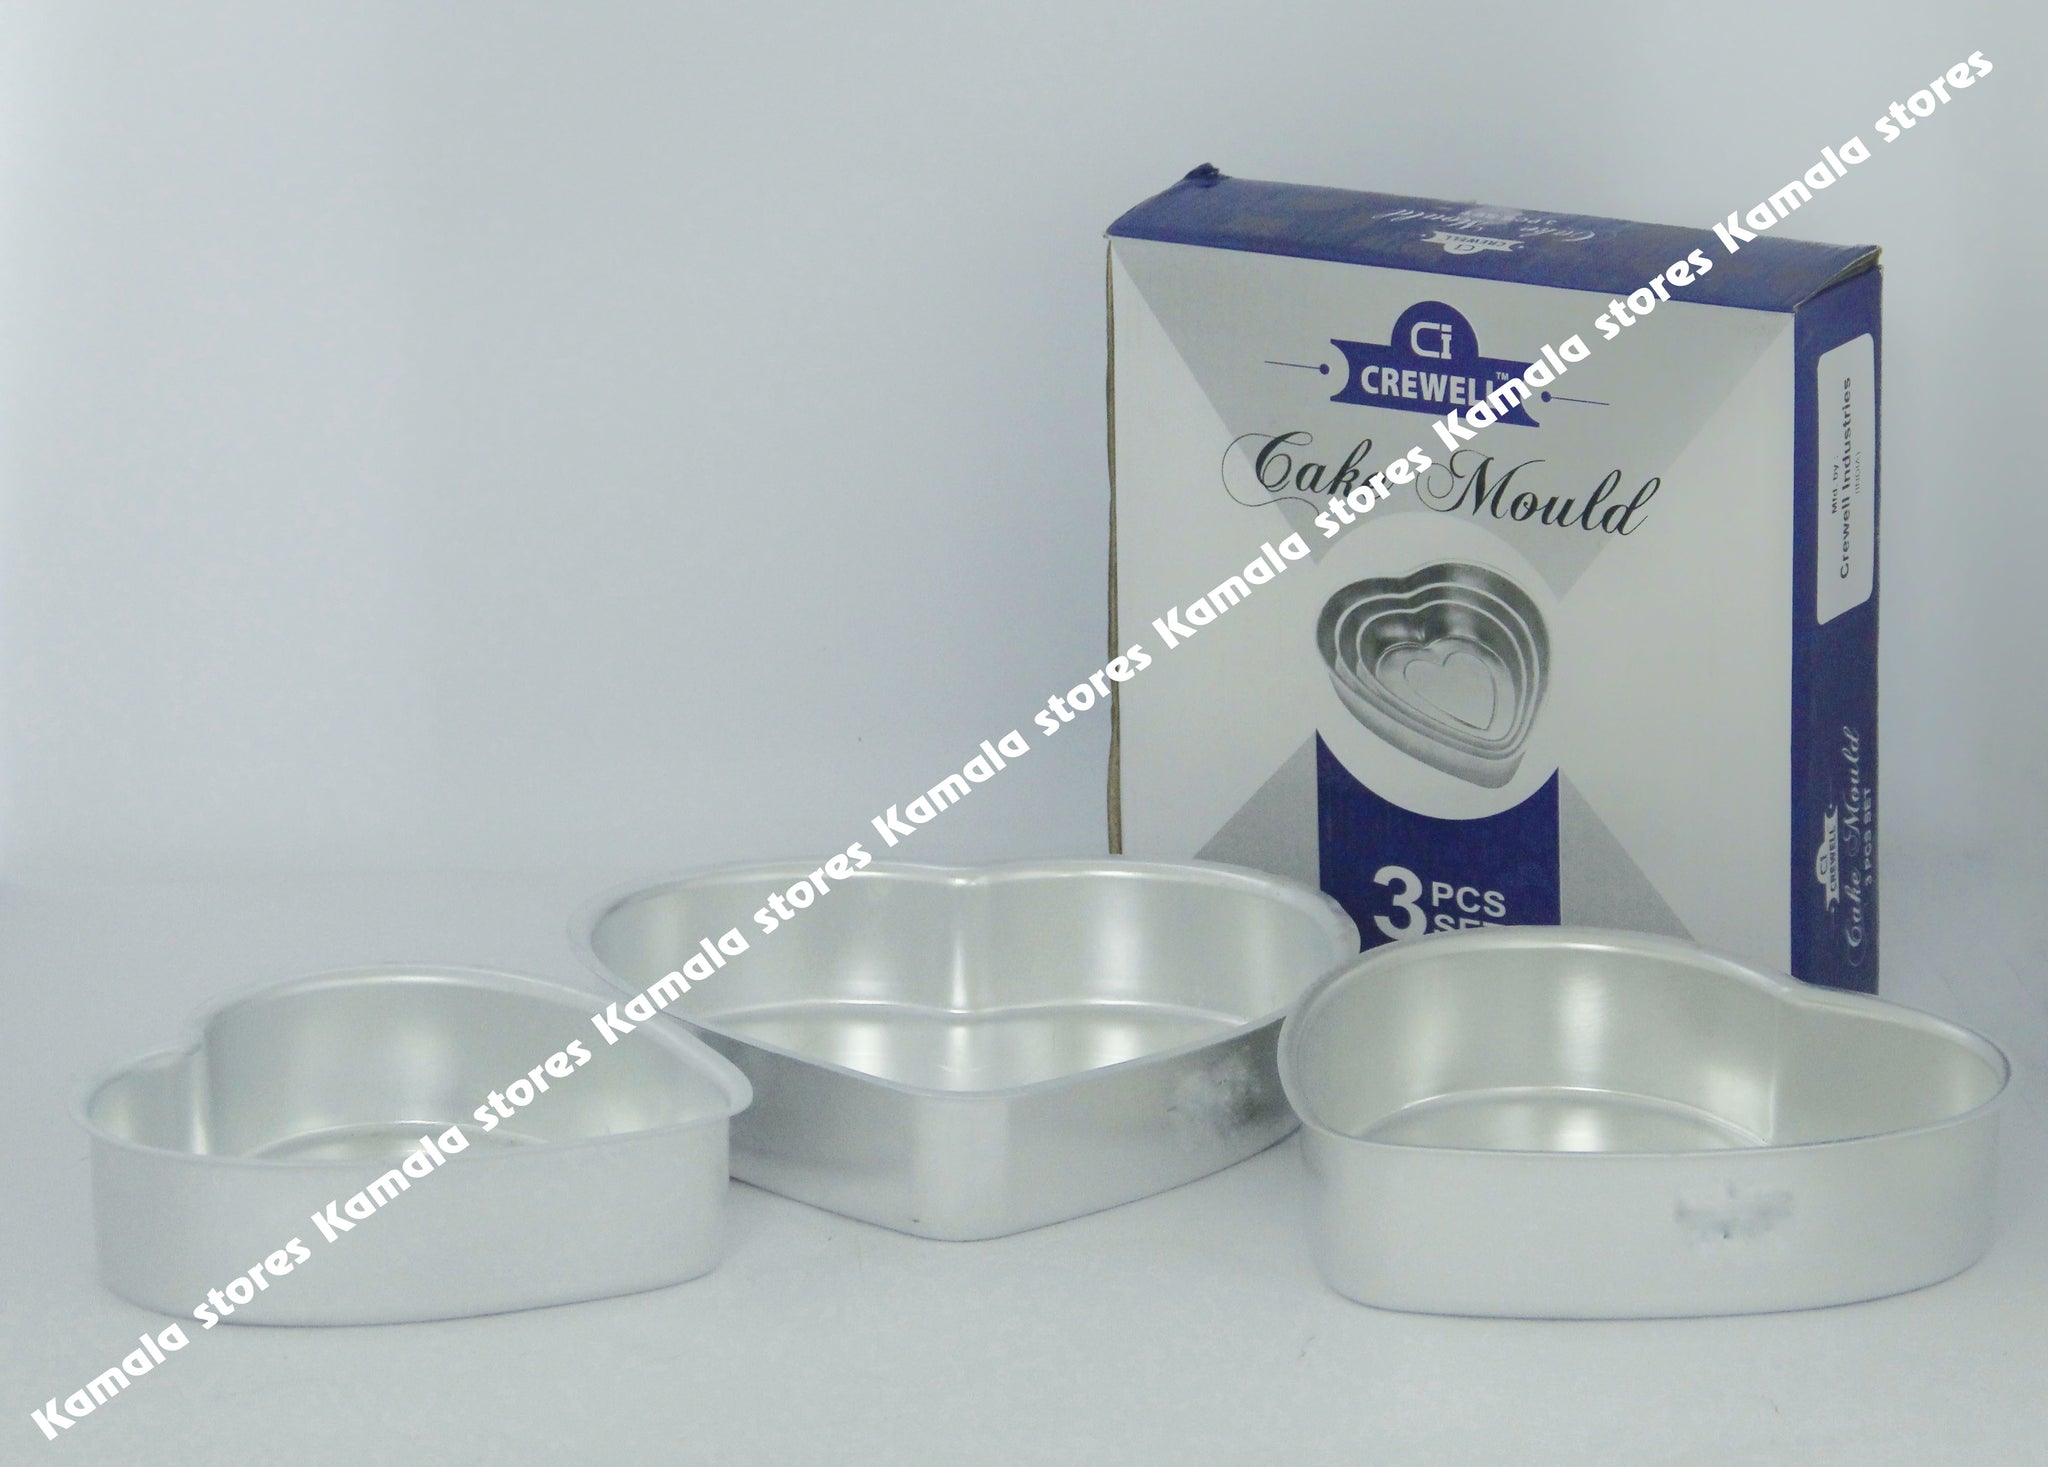 Buy Round Cake Mold Set Collapsible Baking Pans - 3 Pcs at Best Price in  Pakistan